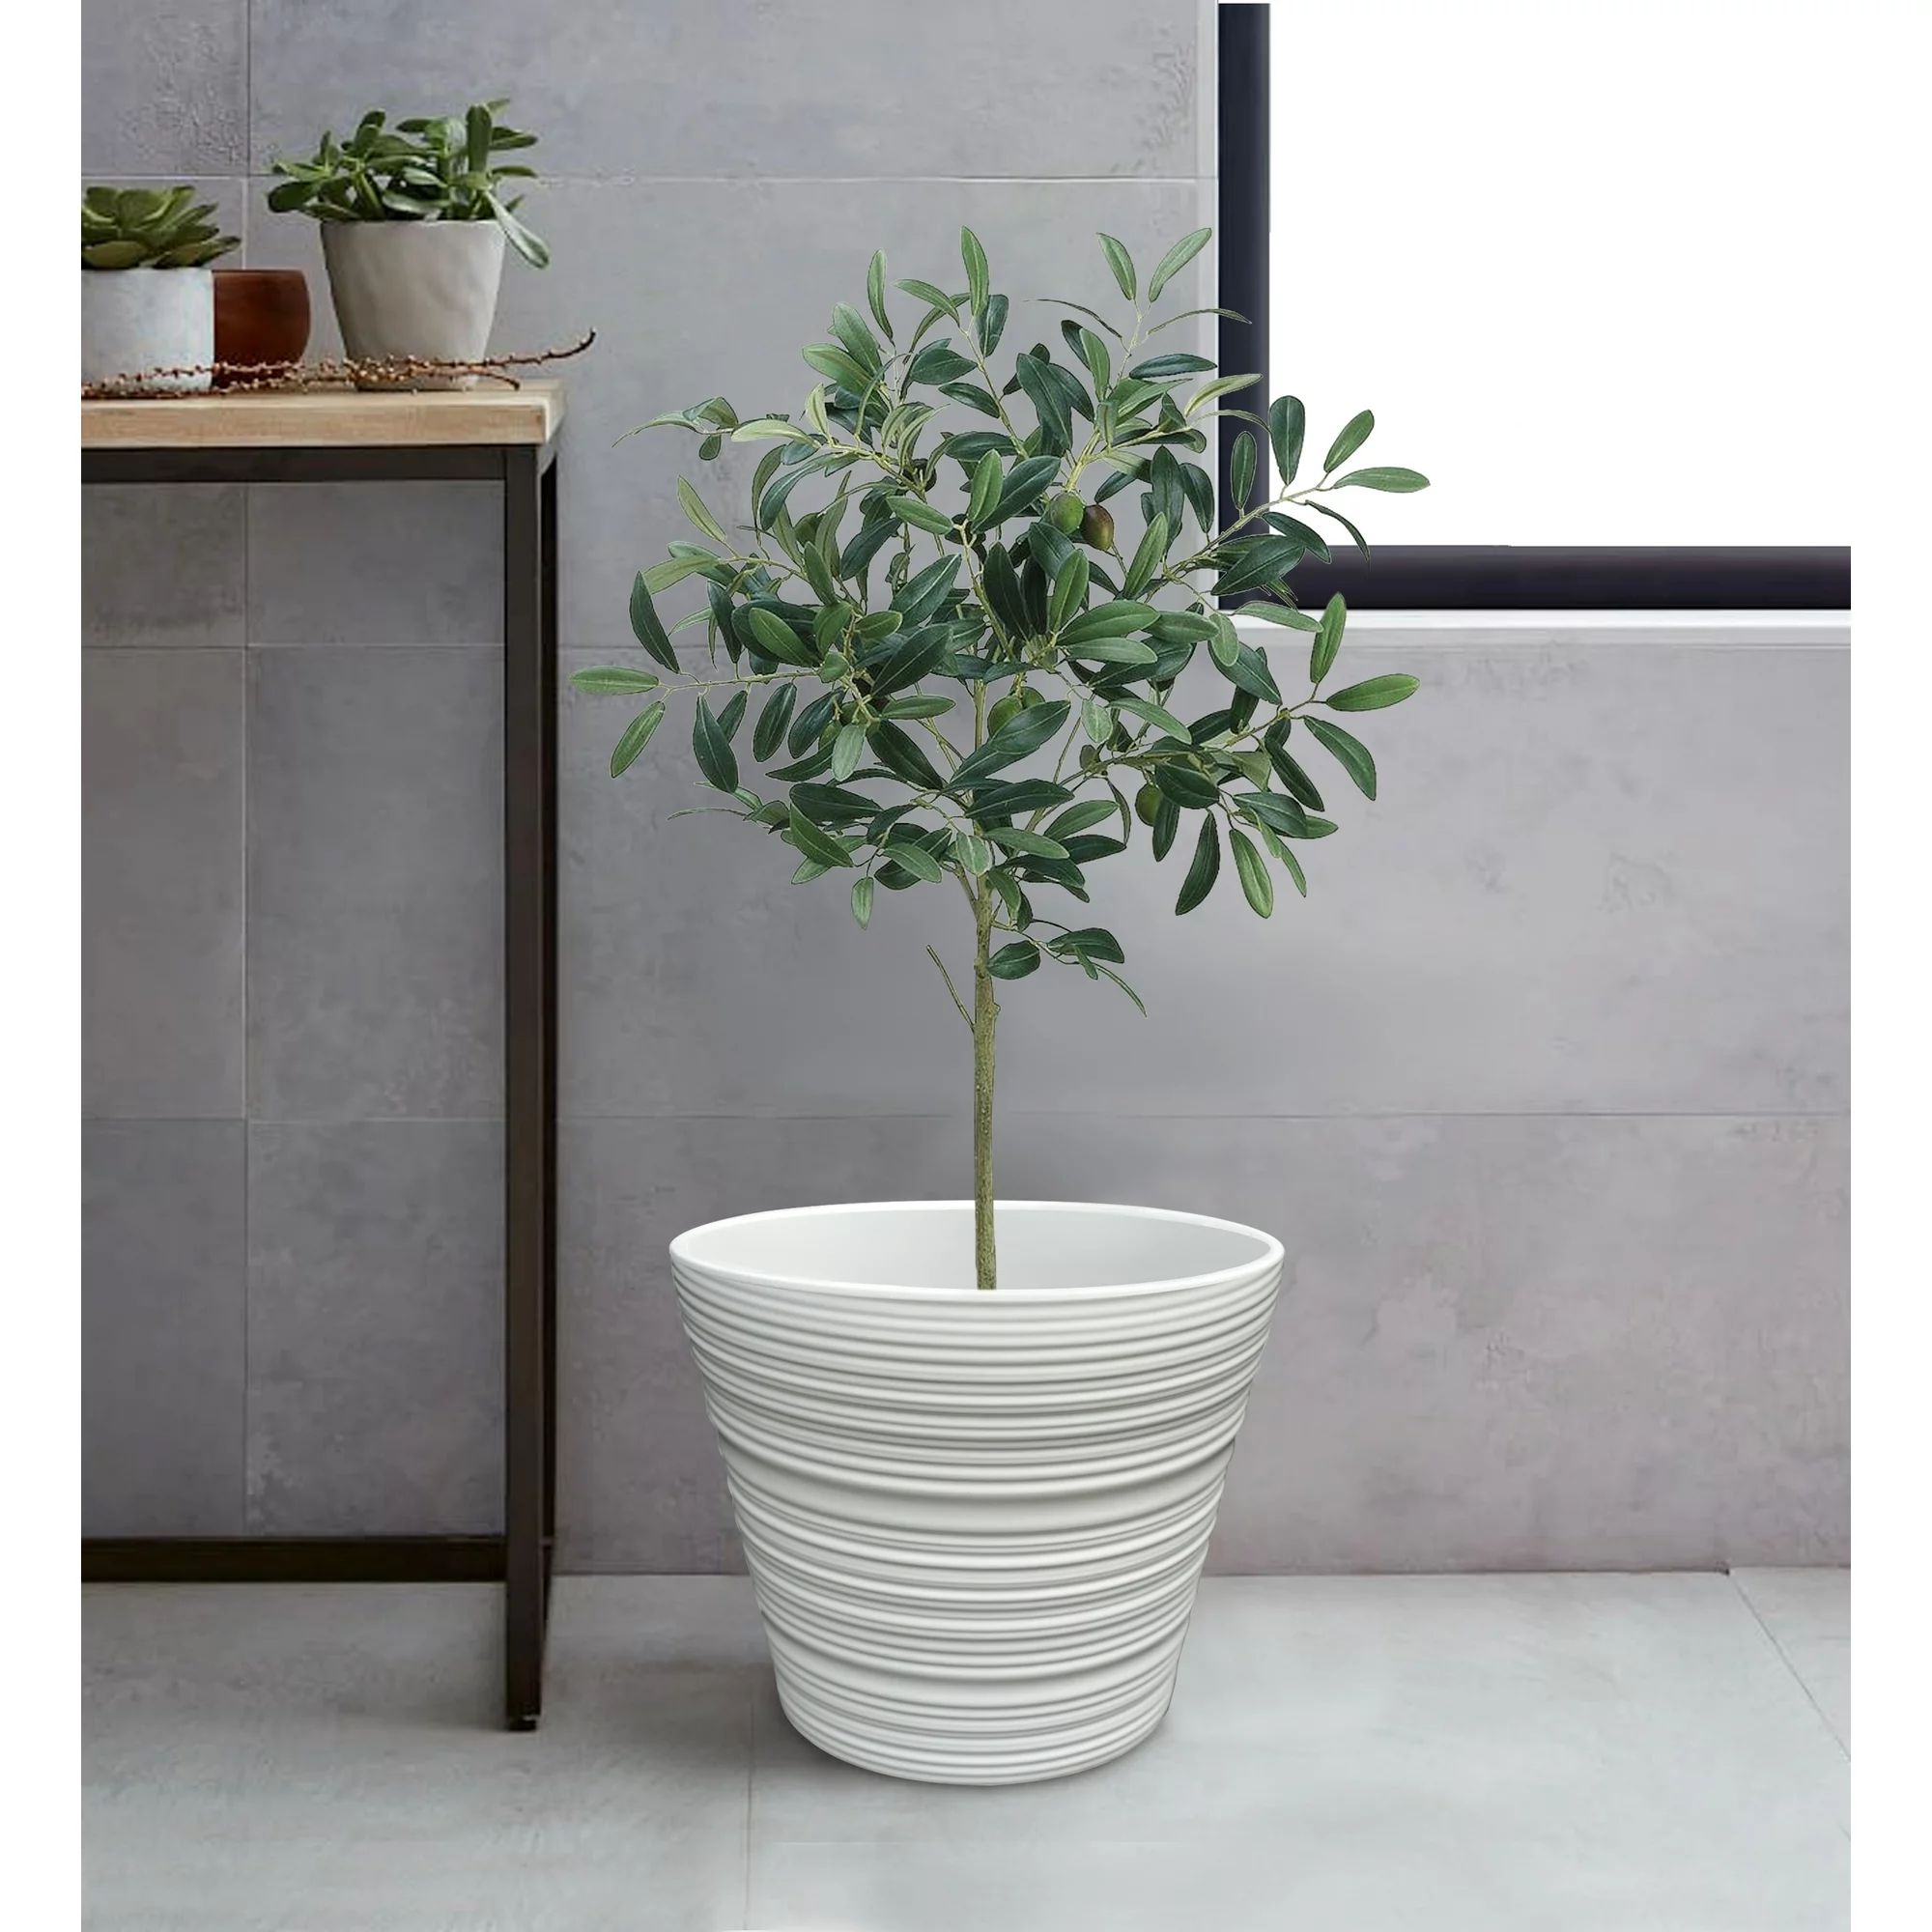 Mainstays 12" x 12" x 10" Round White Ceramic Striped Plant Planter | Walmart (US)